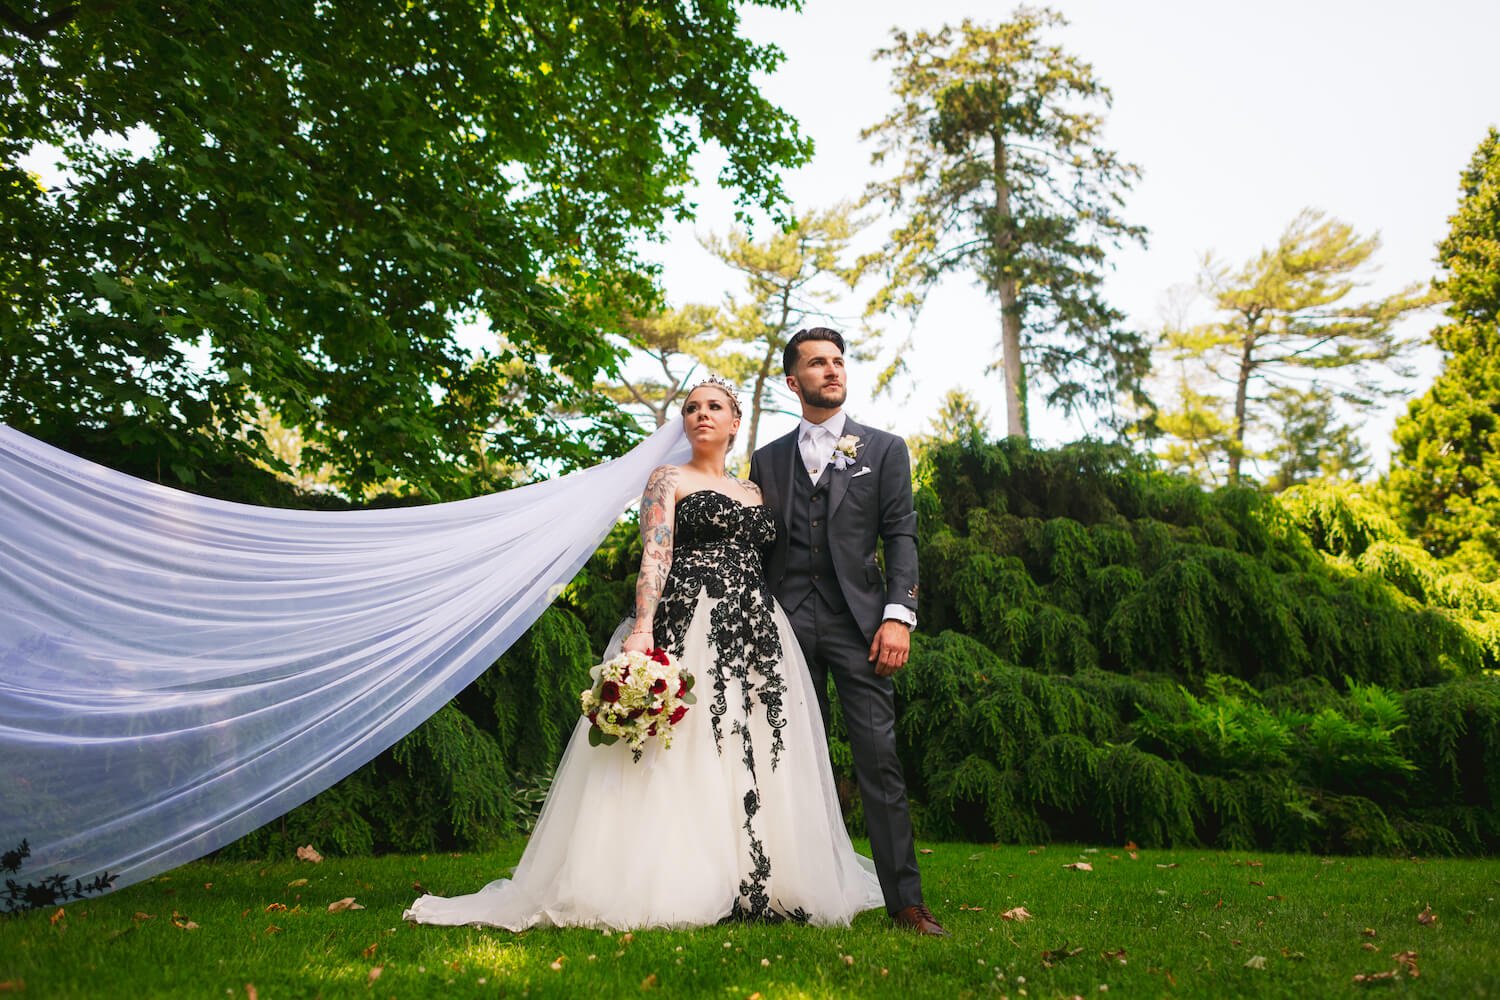  Bayard Cutting Arboretum wedding photography by Chris Basford Photography. 